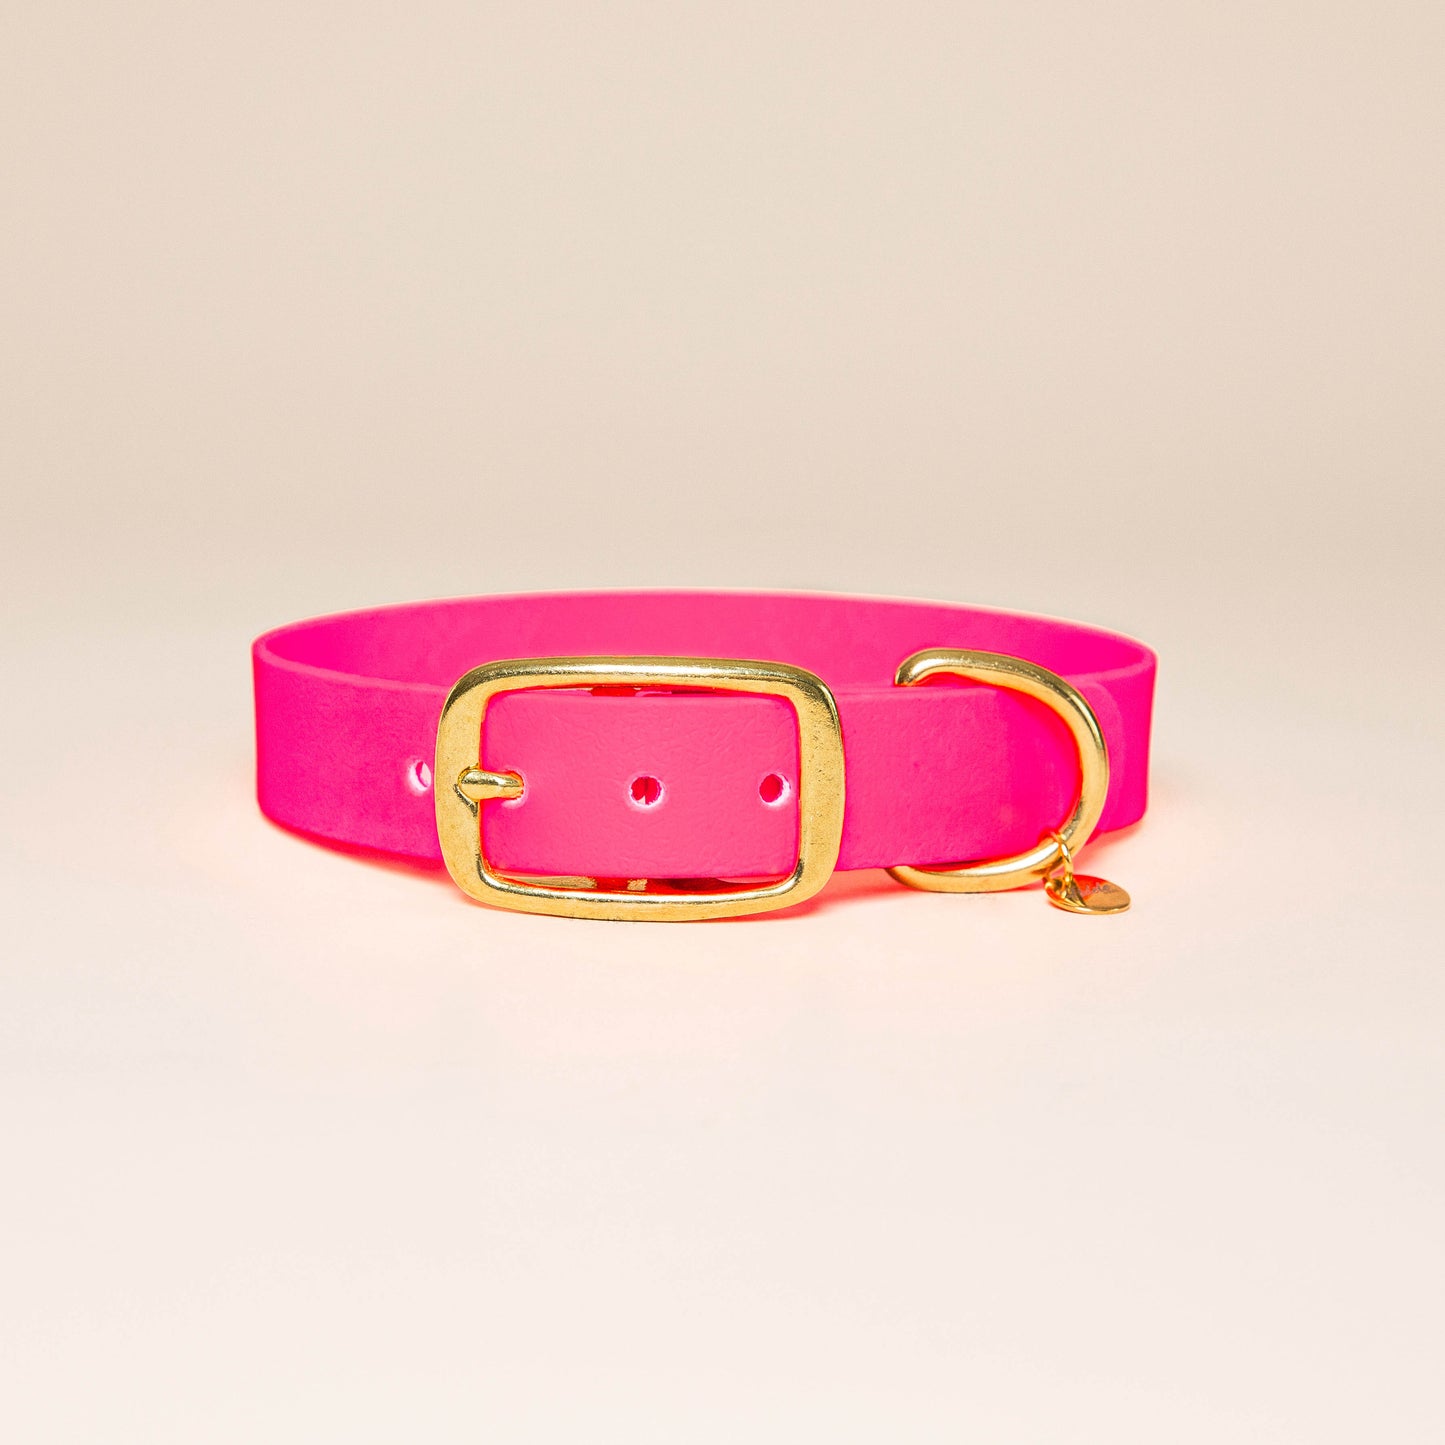 "The adventurer" necklace - Neon pink